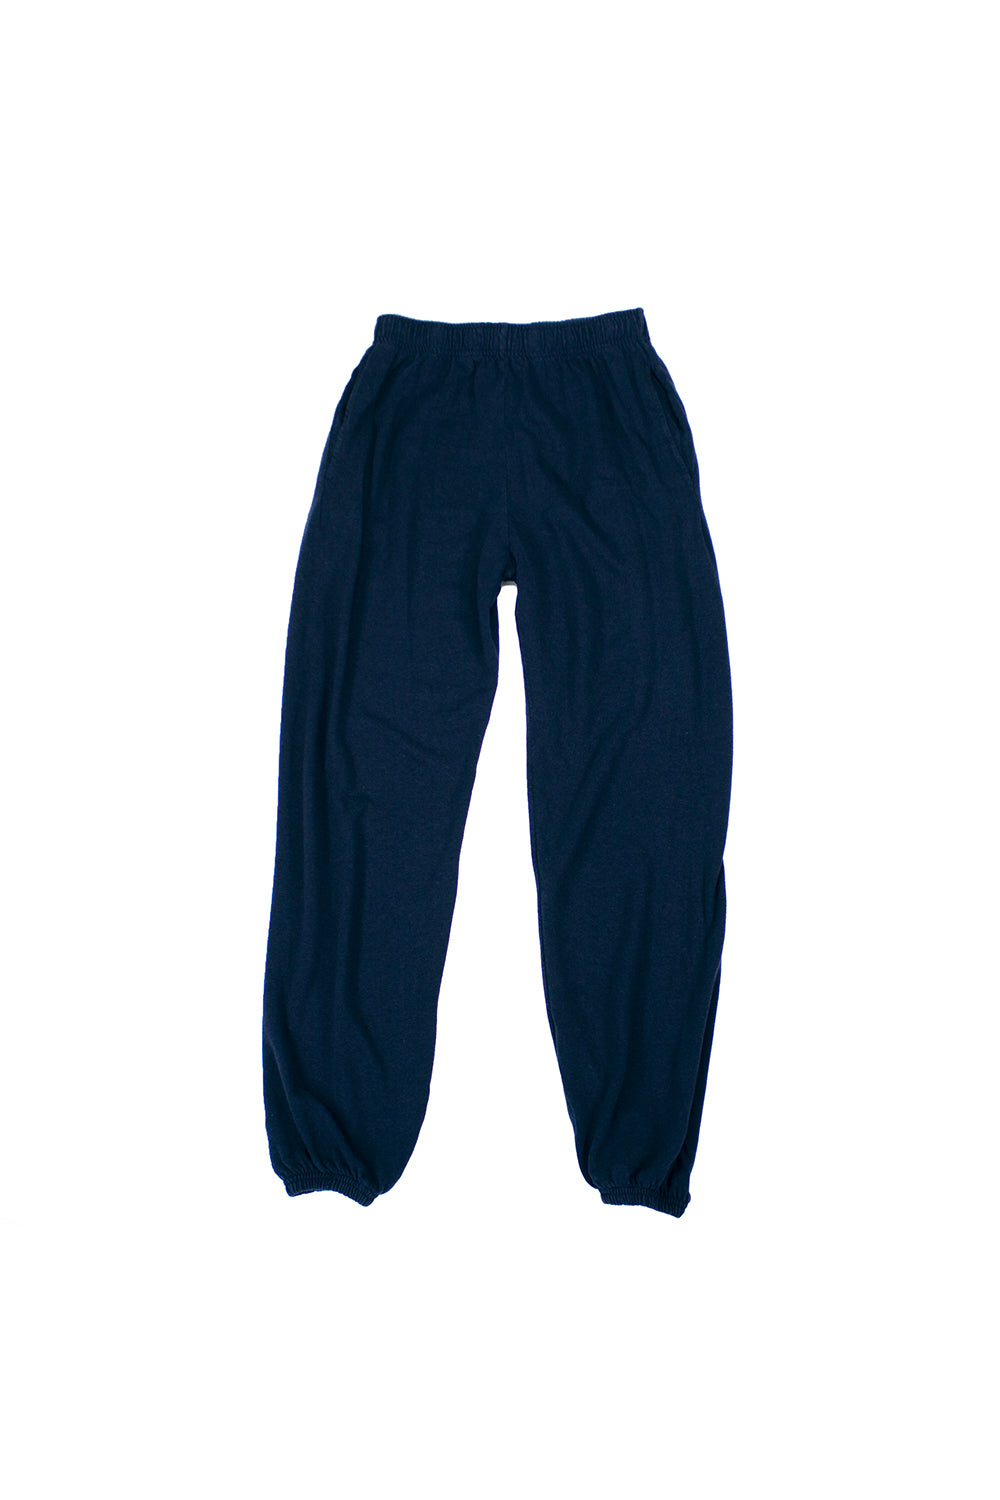 Alaska Hemp Wool Sweatpant | Jungmaven Hemp Clothing & Accessories / Color: Navy